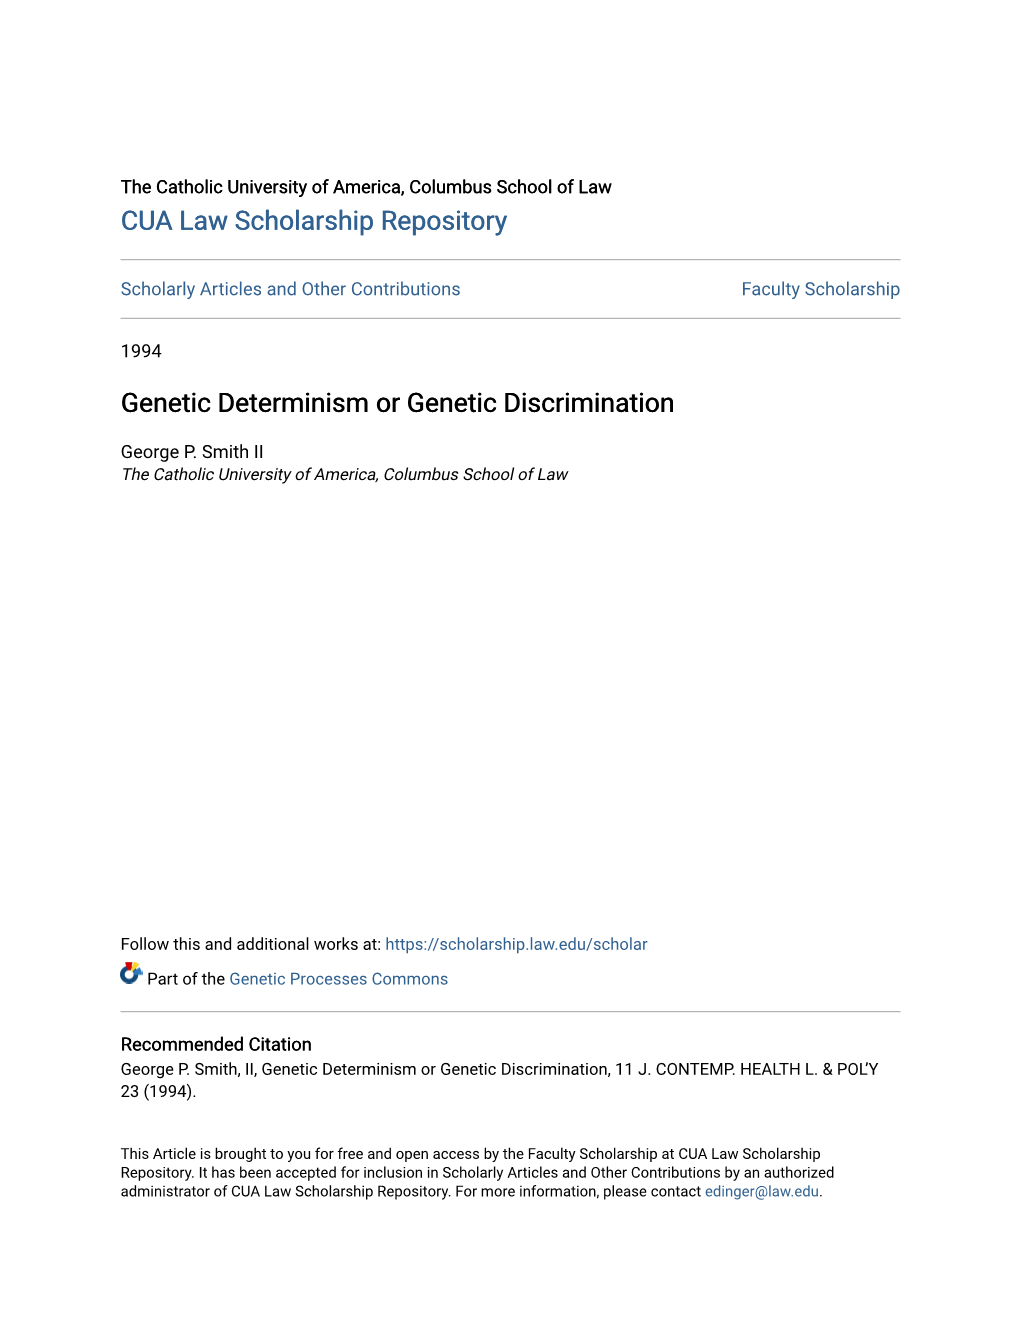 Genetic Determinism Or Genetic Discrimination